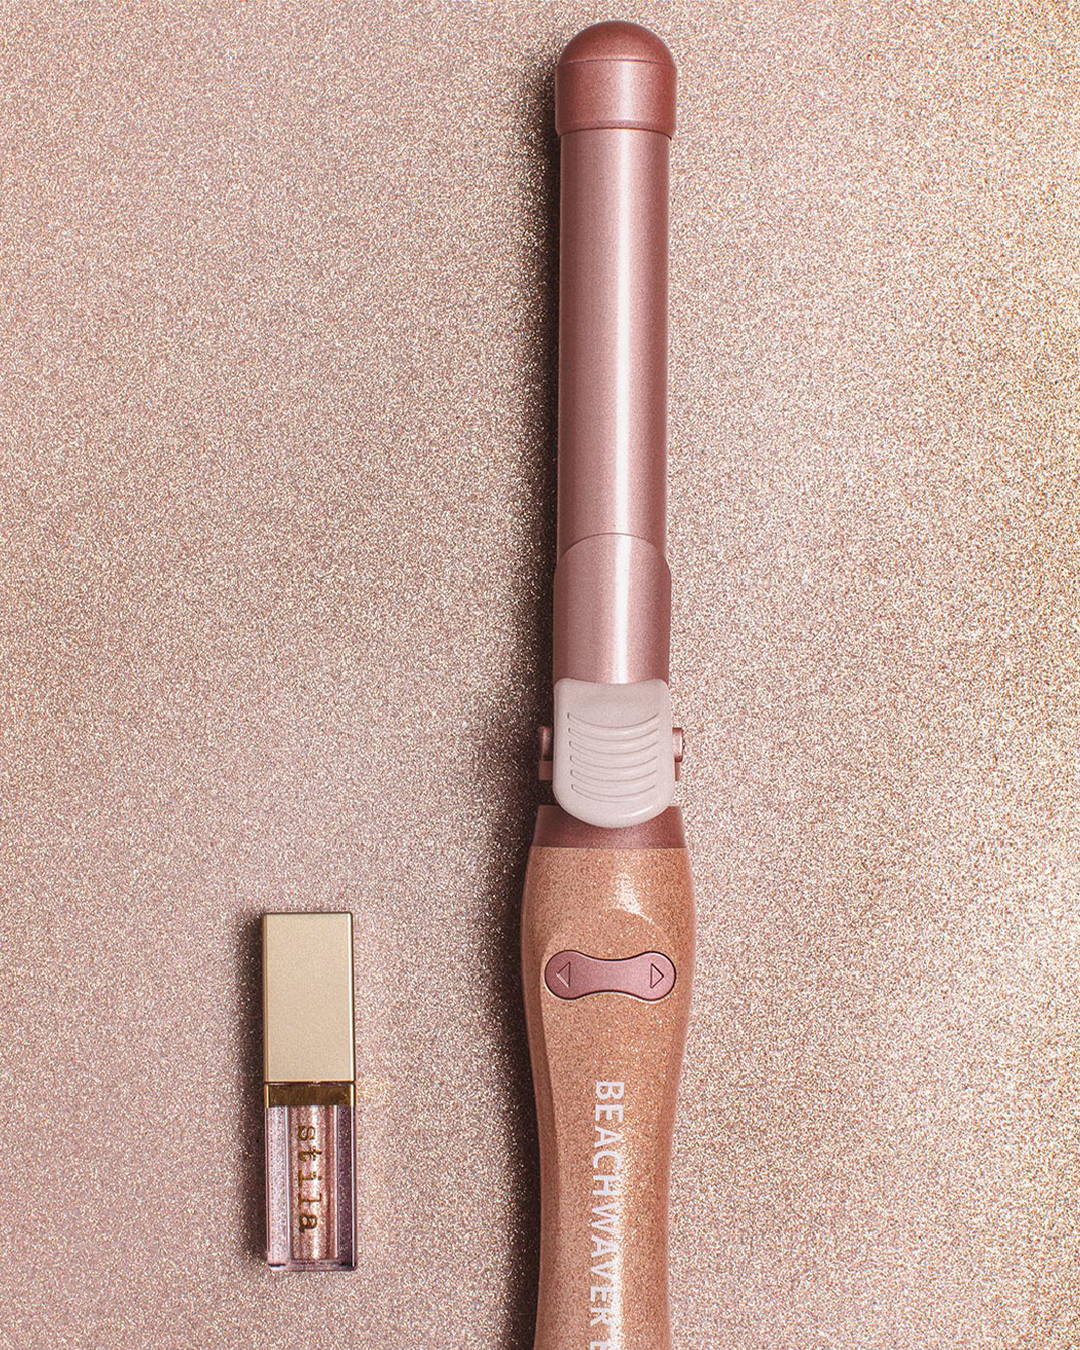 Image of pink b1 Beachwaver hair curler and Stila Glitter Makeup on a pink glitter Background 